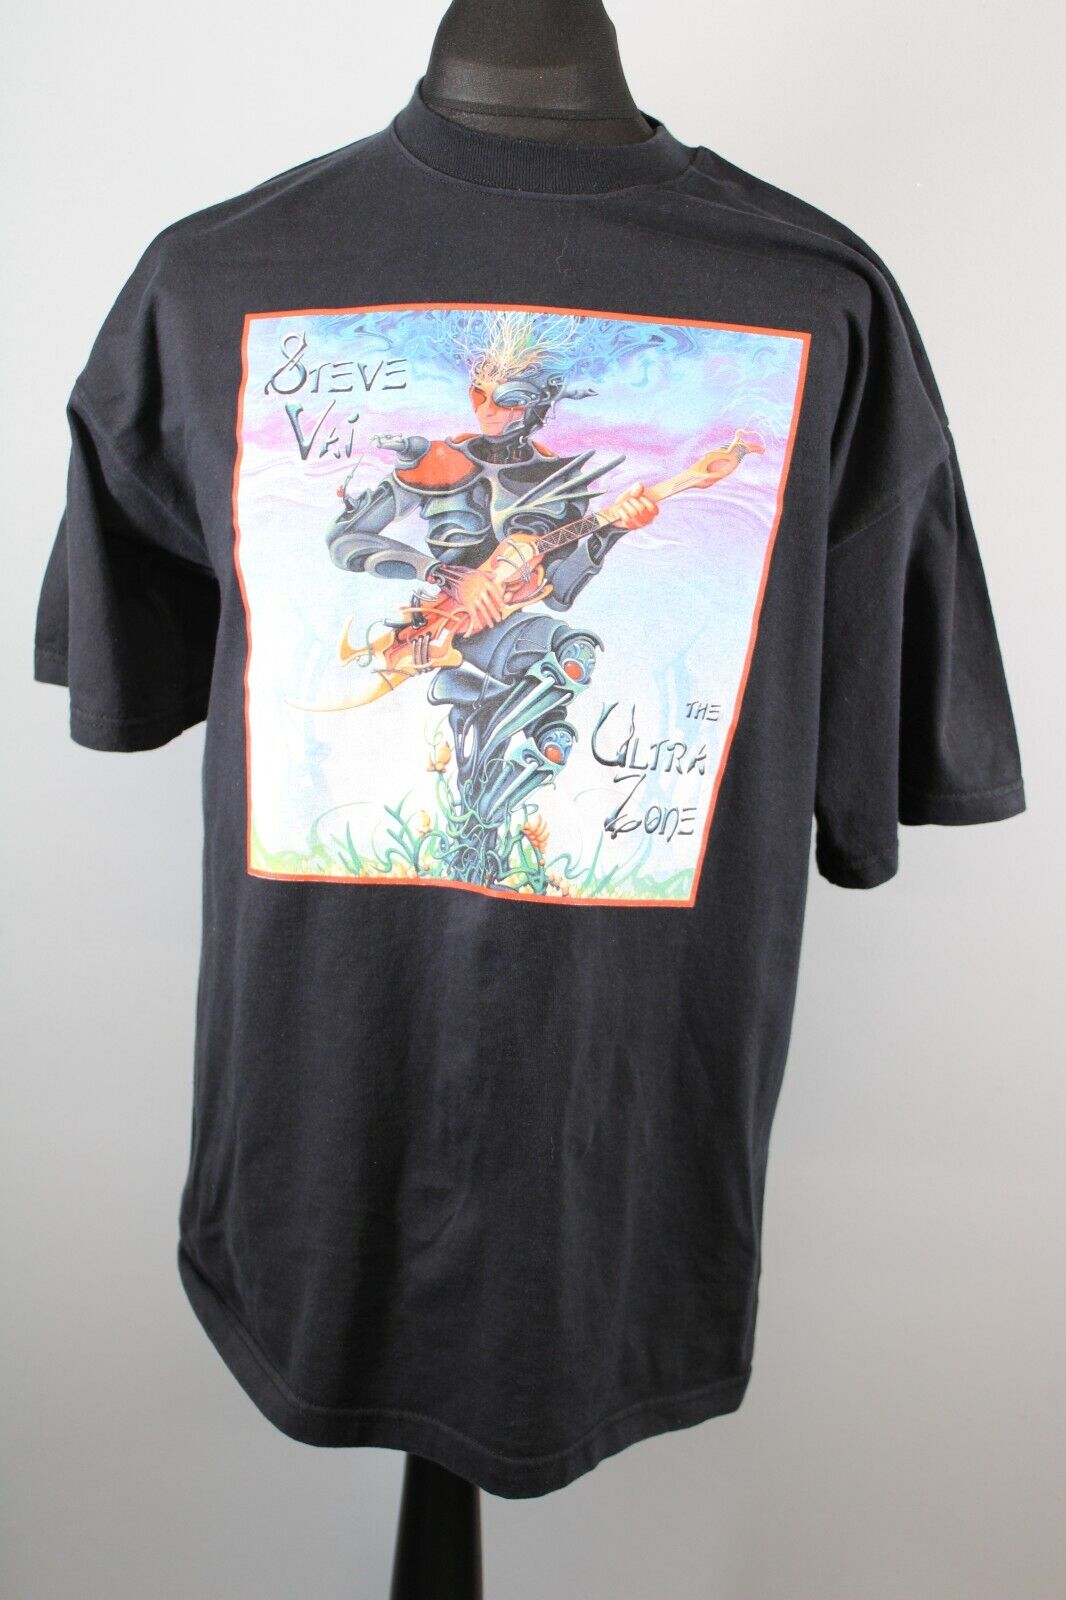 Steve Vai Shirt Official Vintage Ultra Zone World Tour Promotion 1999-2000